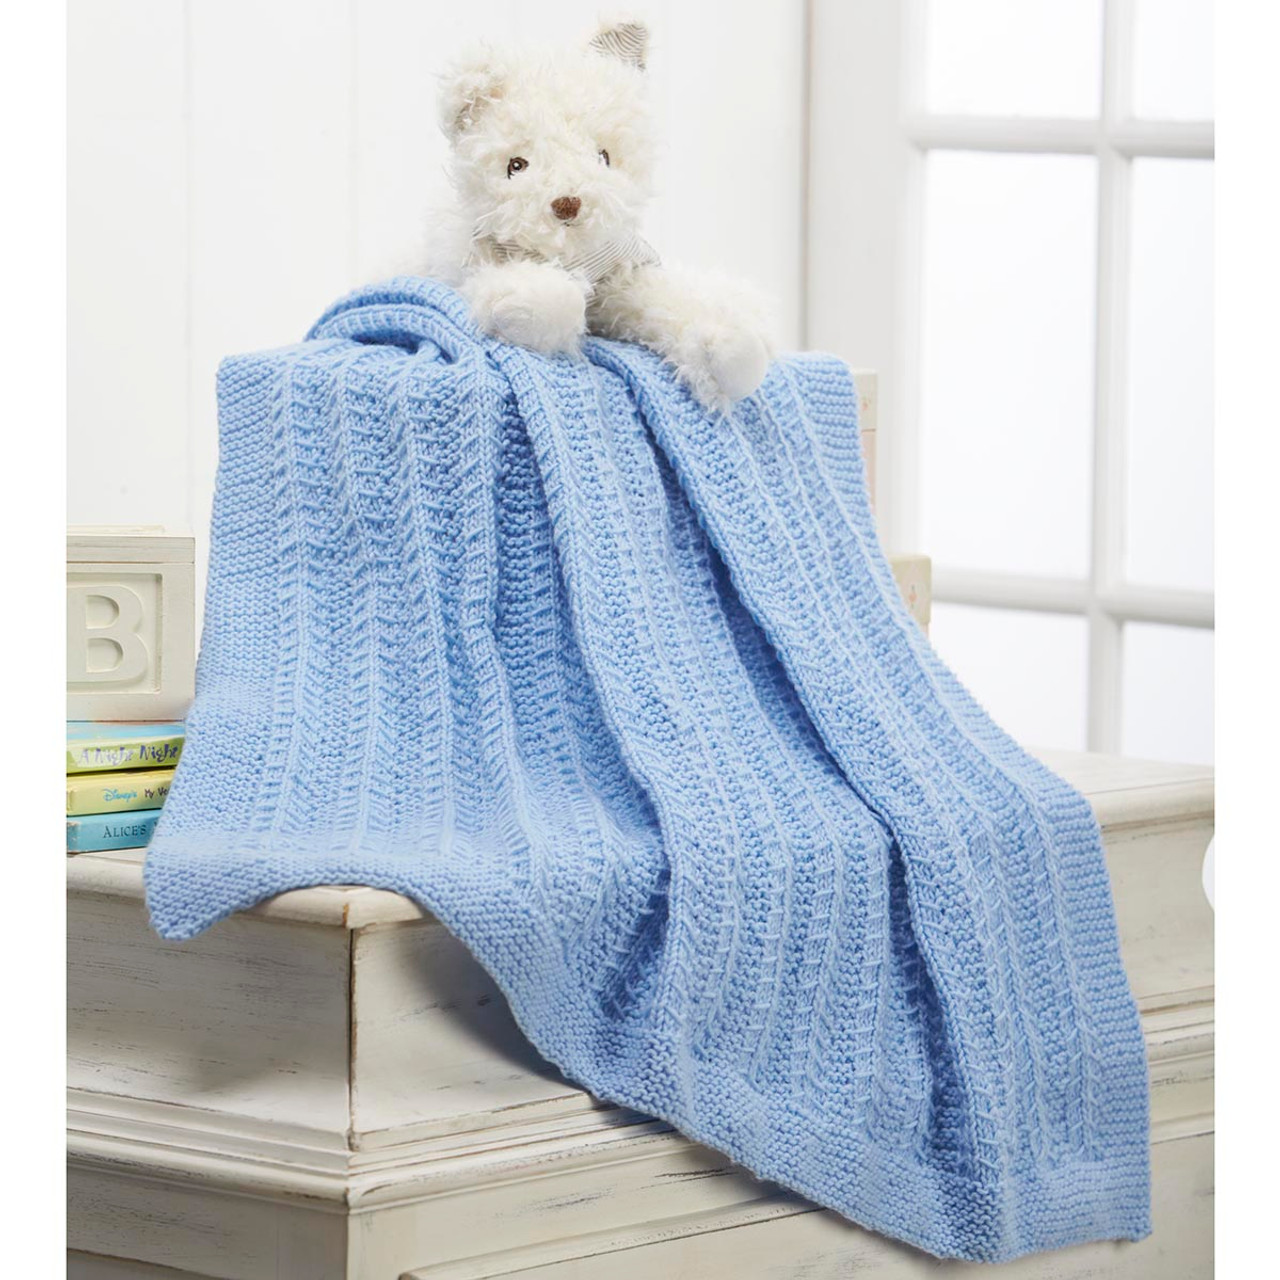 Herrschners Madison Baby Blanket Knit Kit